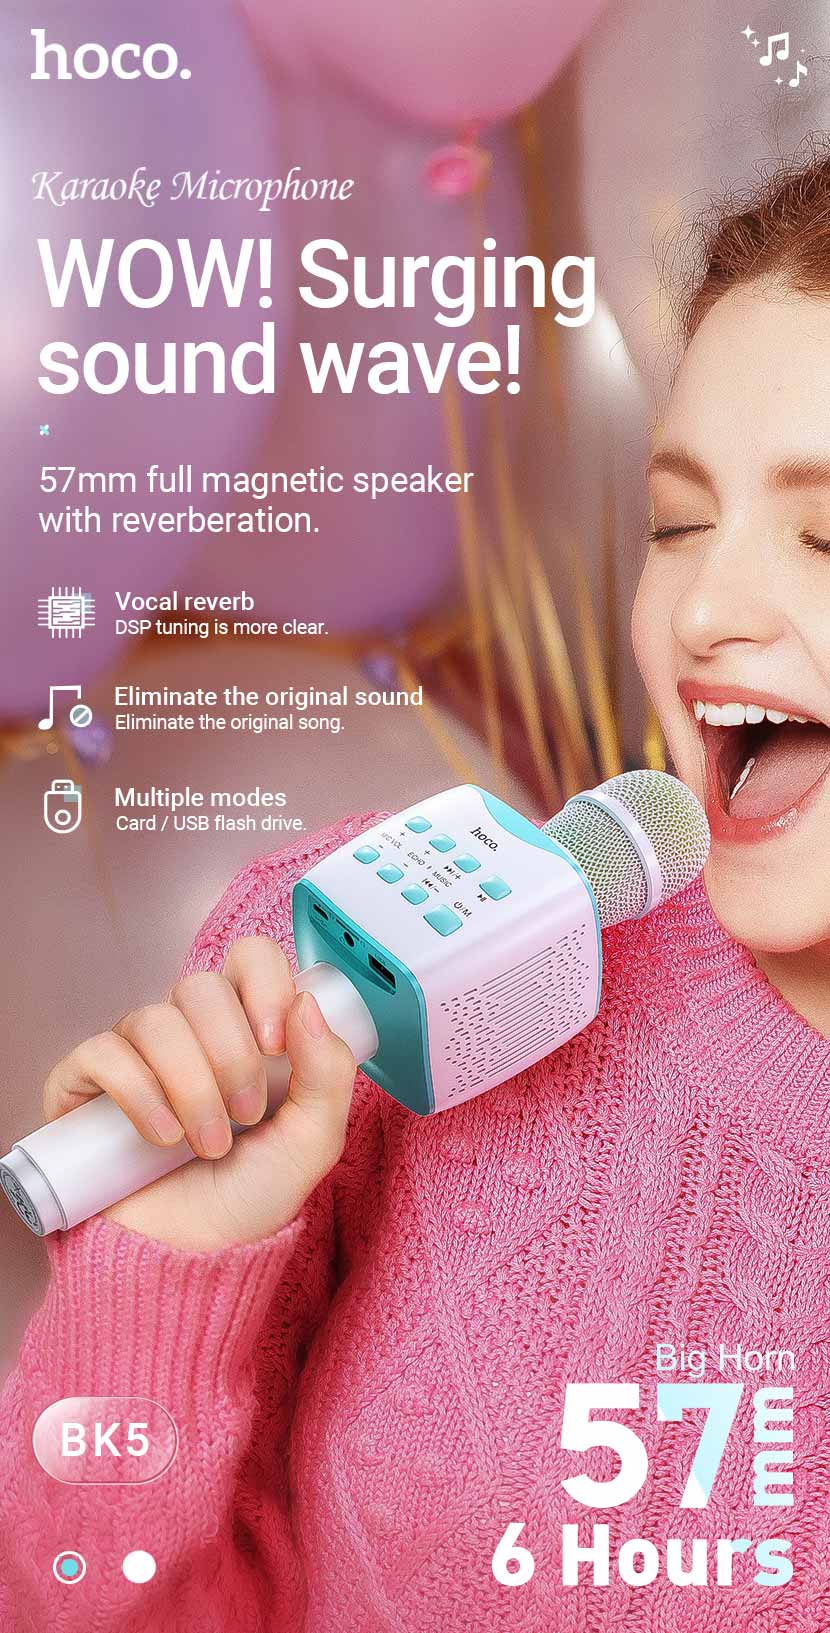 hoco news bk5 cantando karaoke microphone en